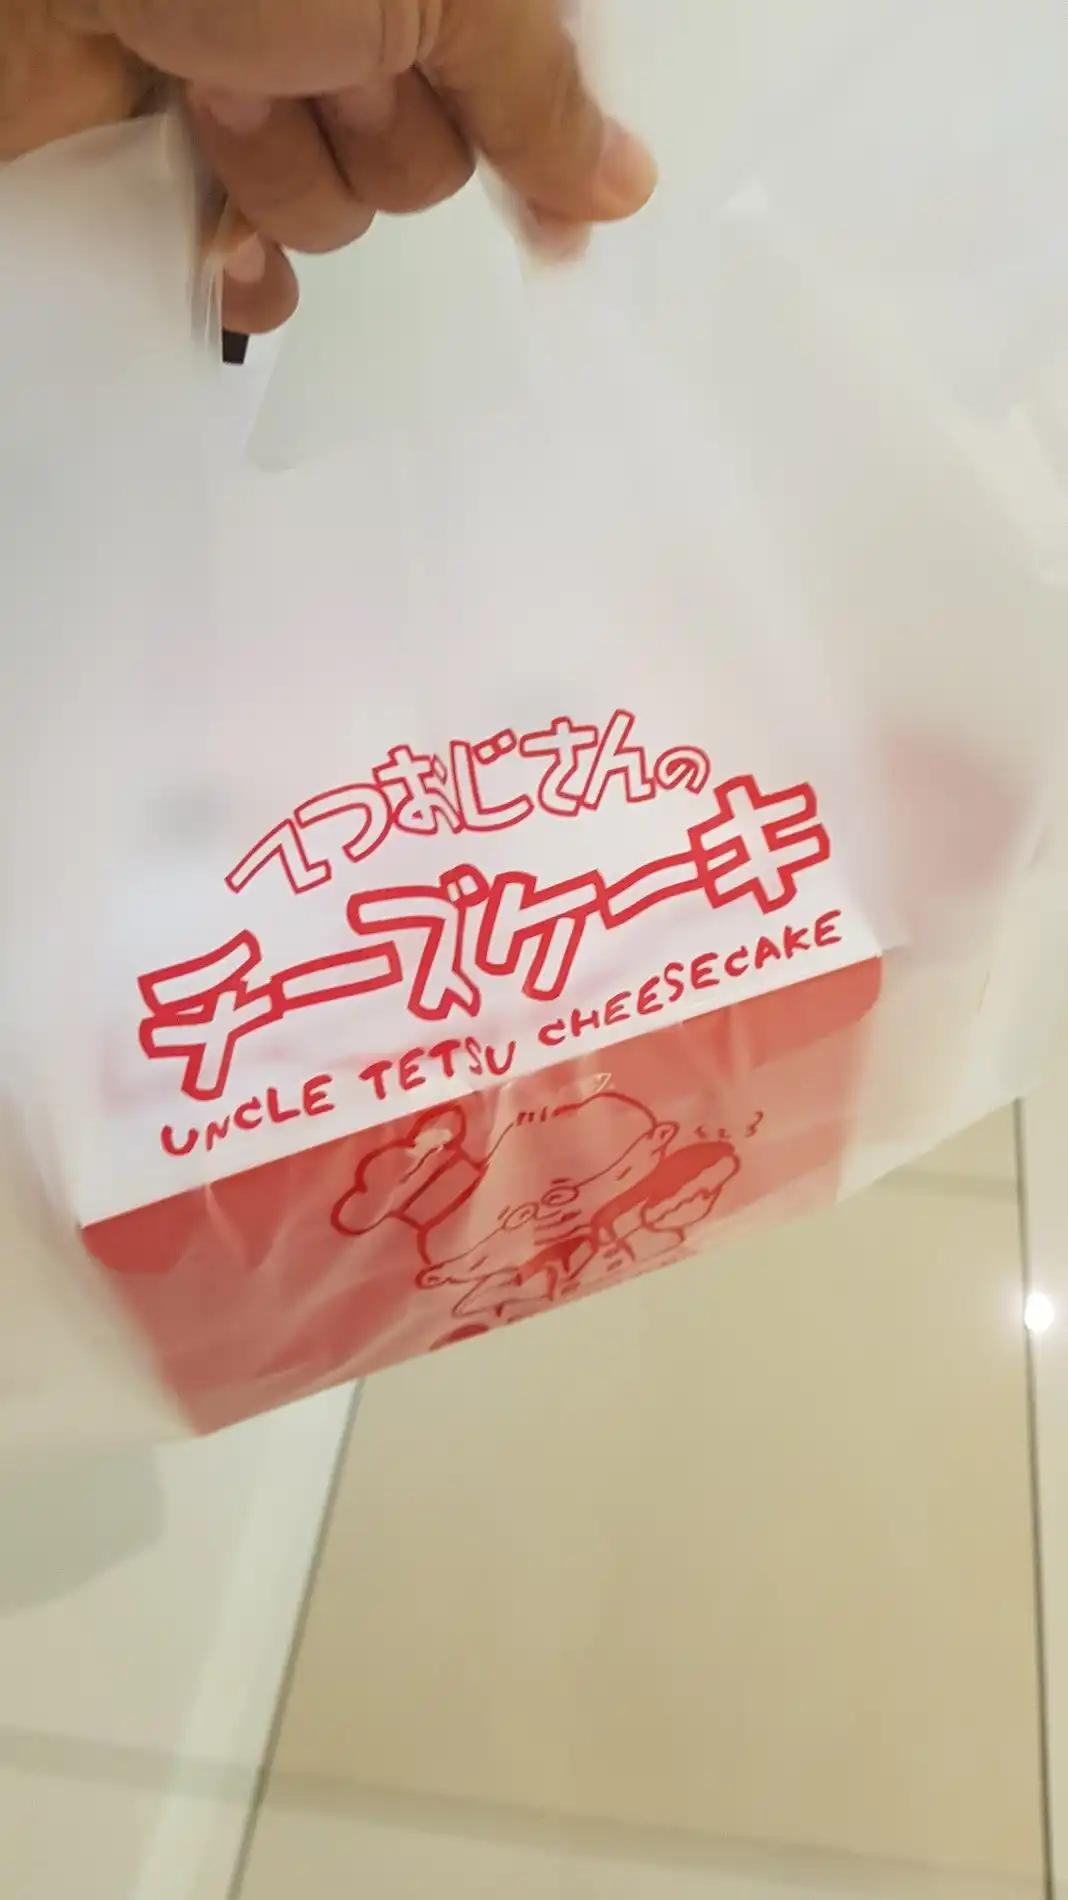 Uncle Tetsu's Cheesecake